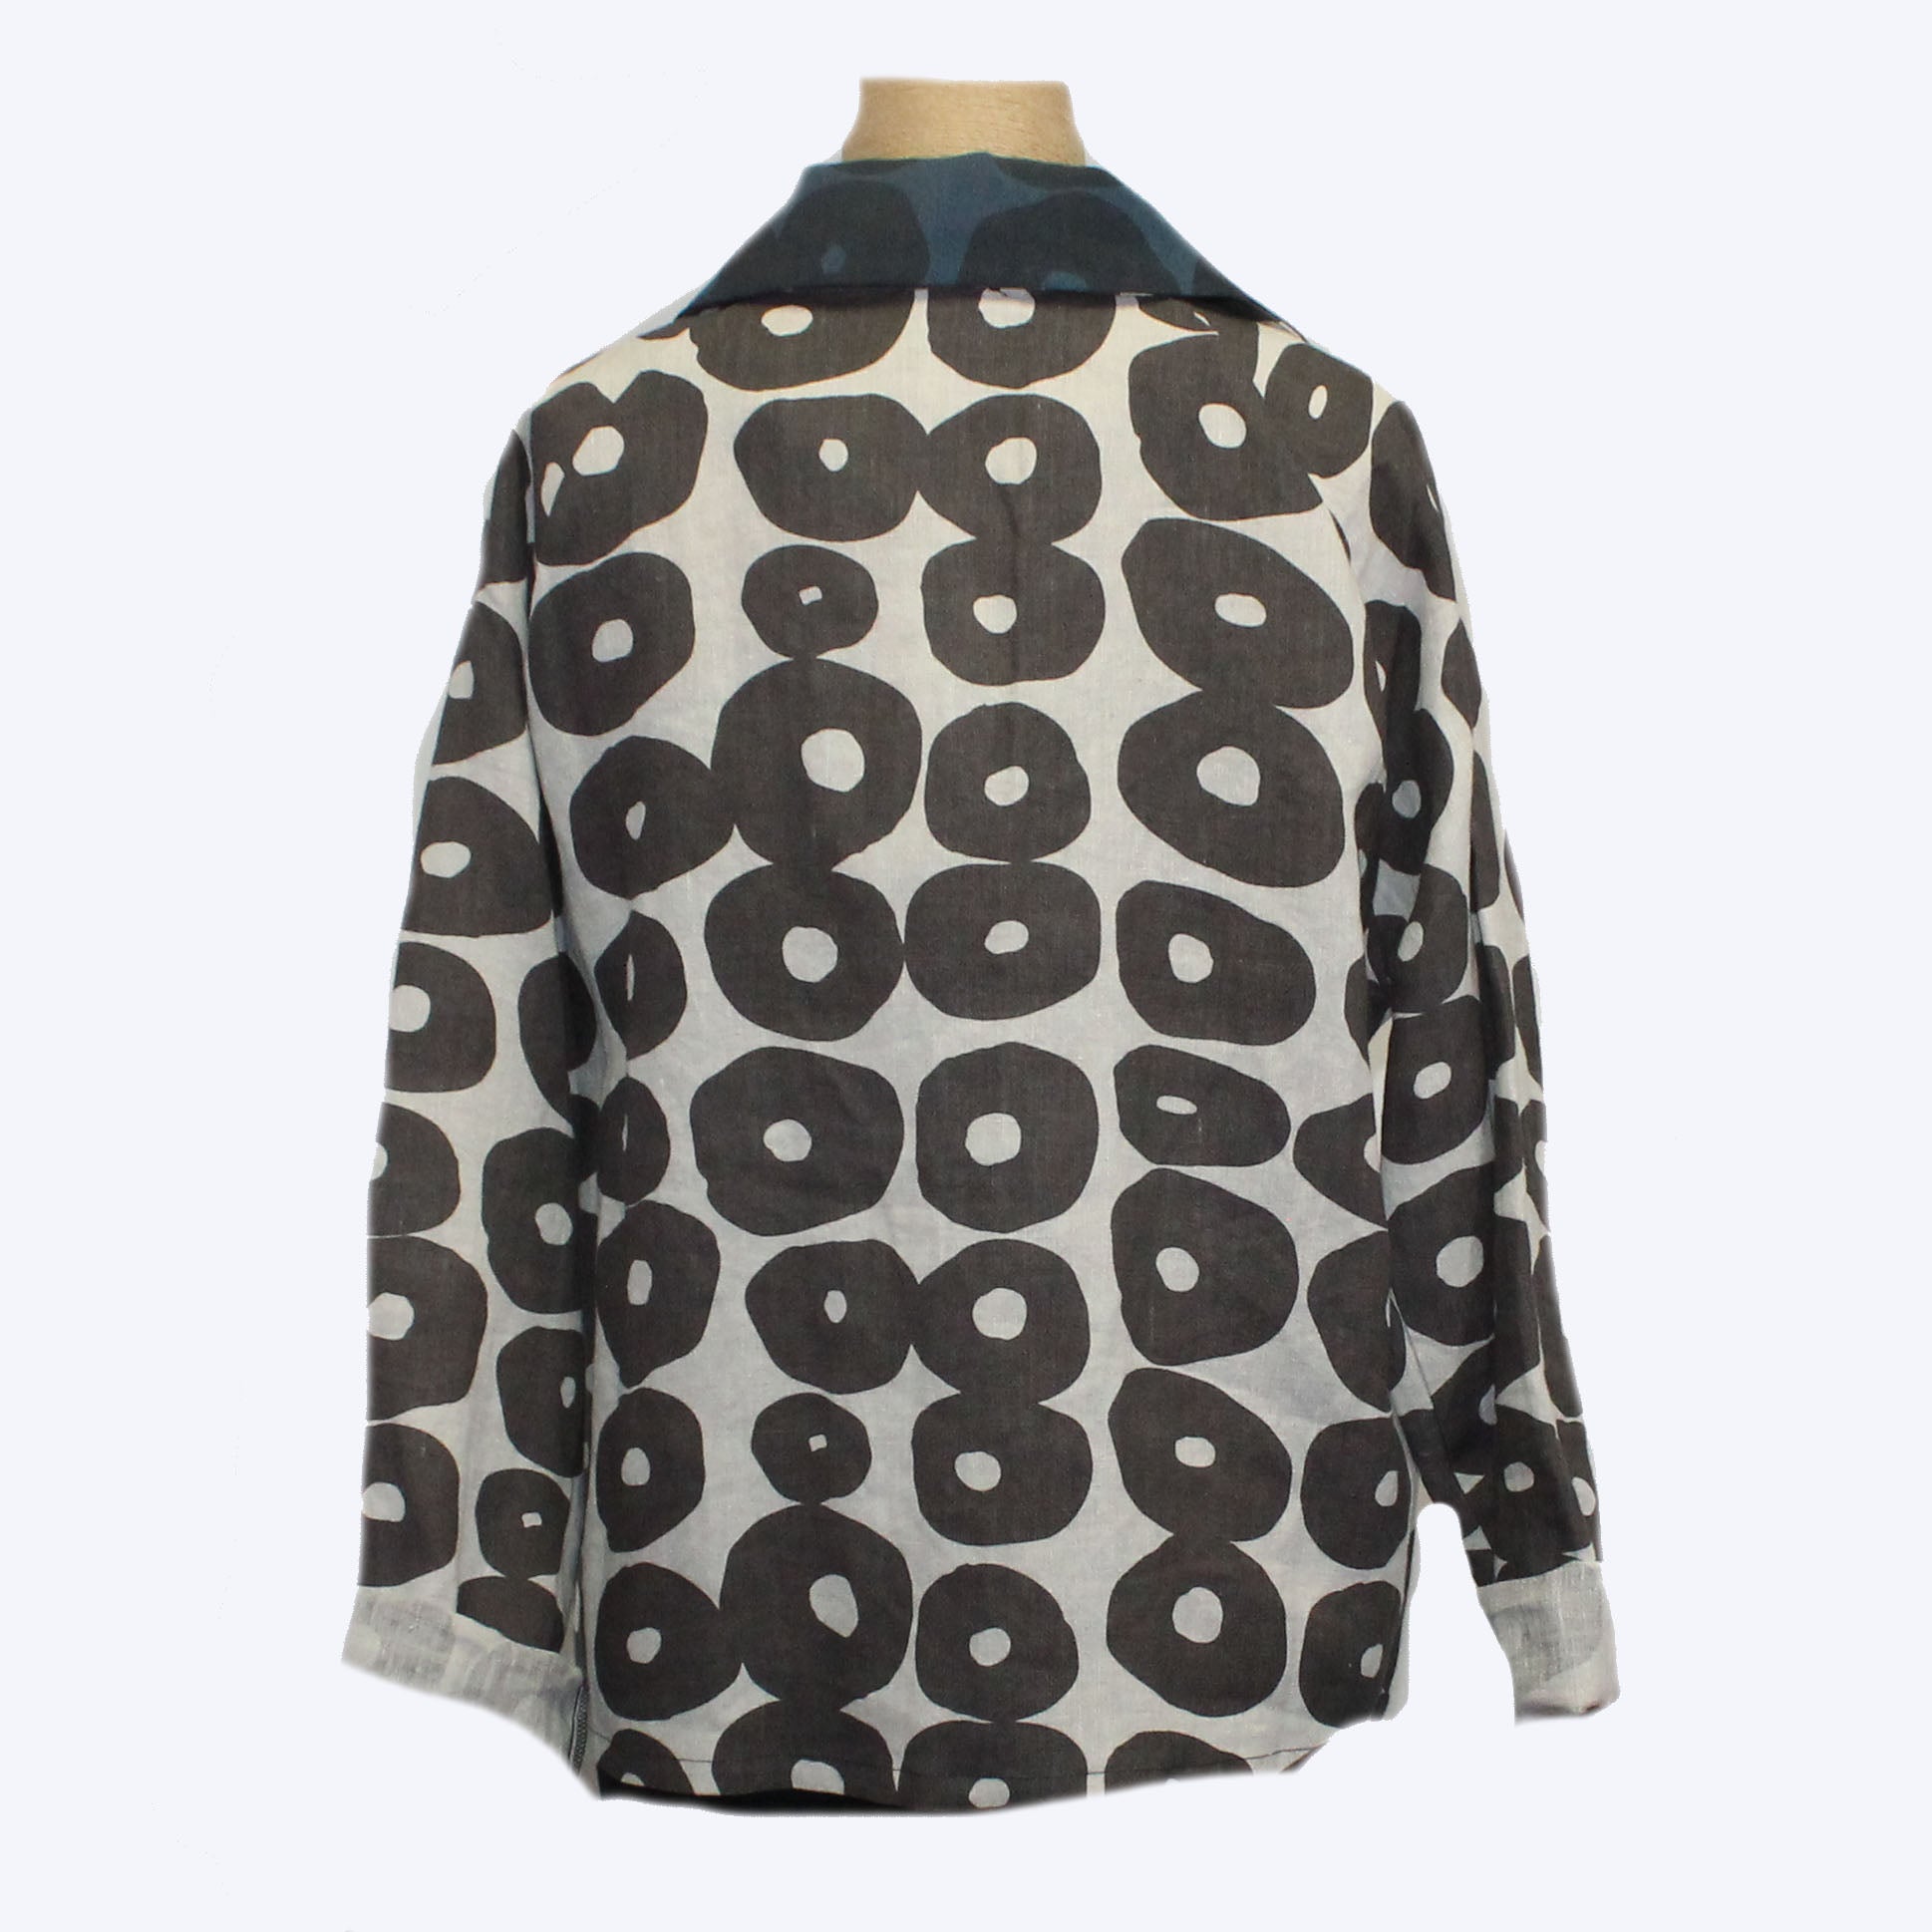 Marla Duran Jacket, Circles, Ivory/Taupe, XS